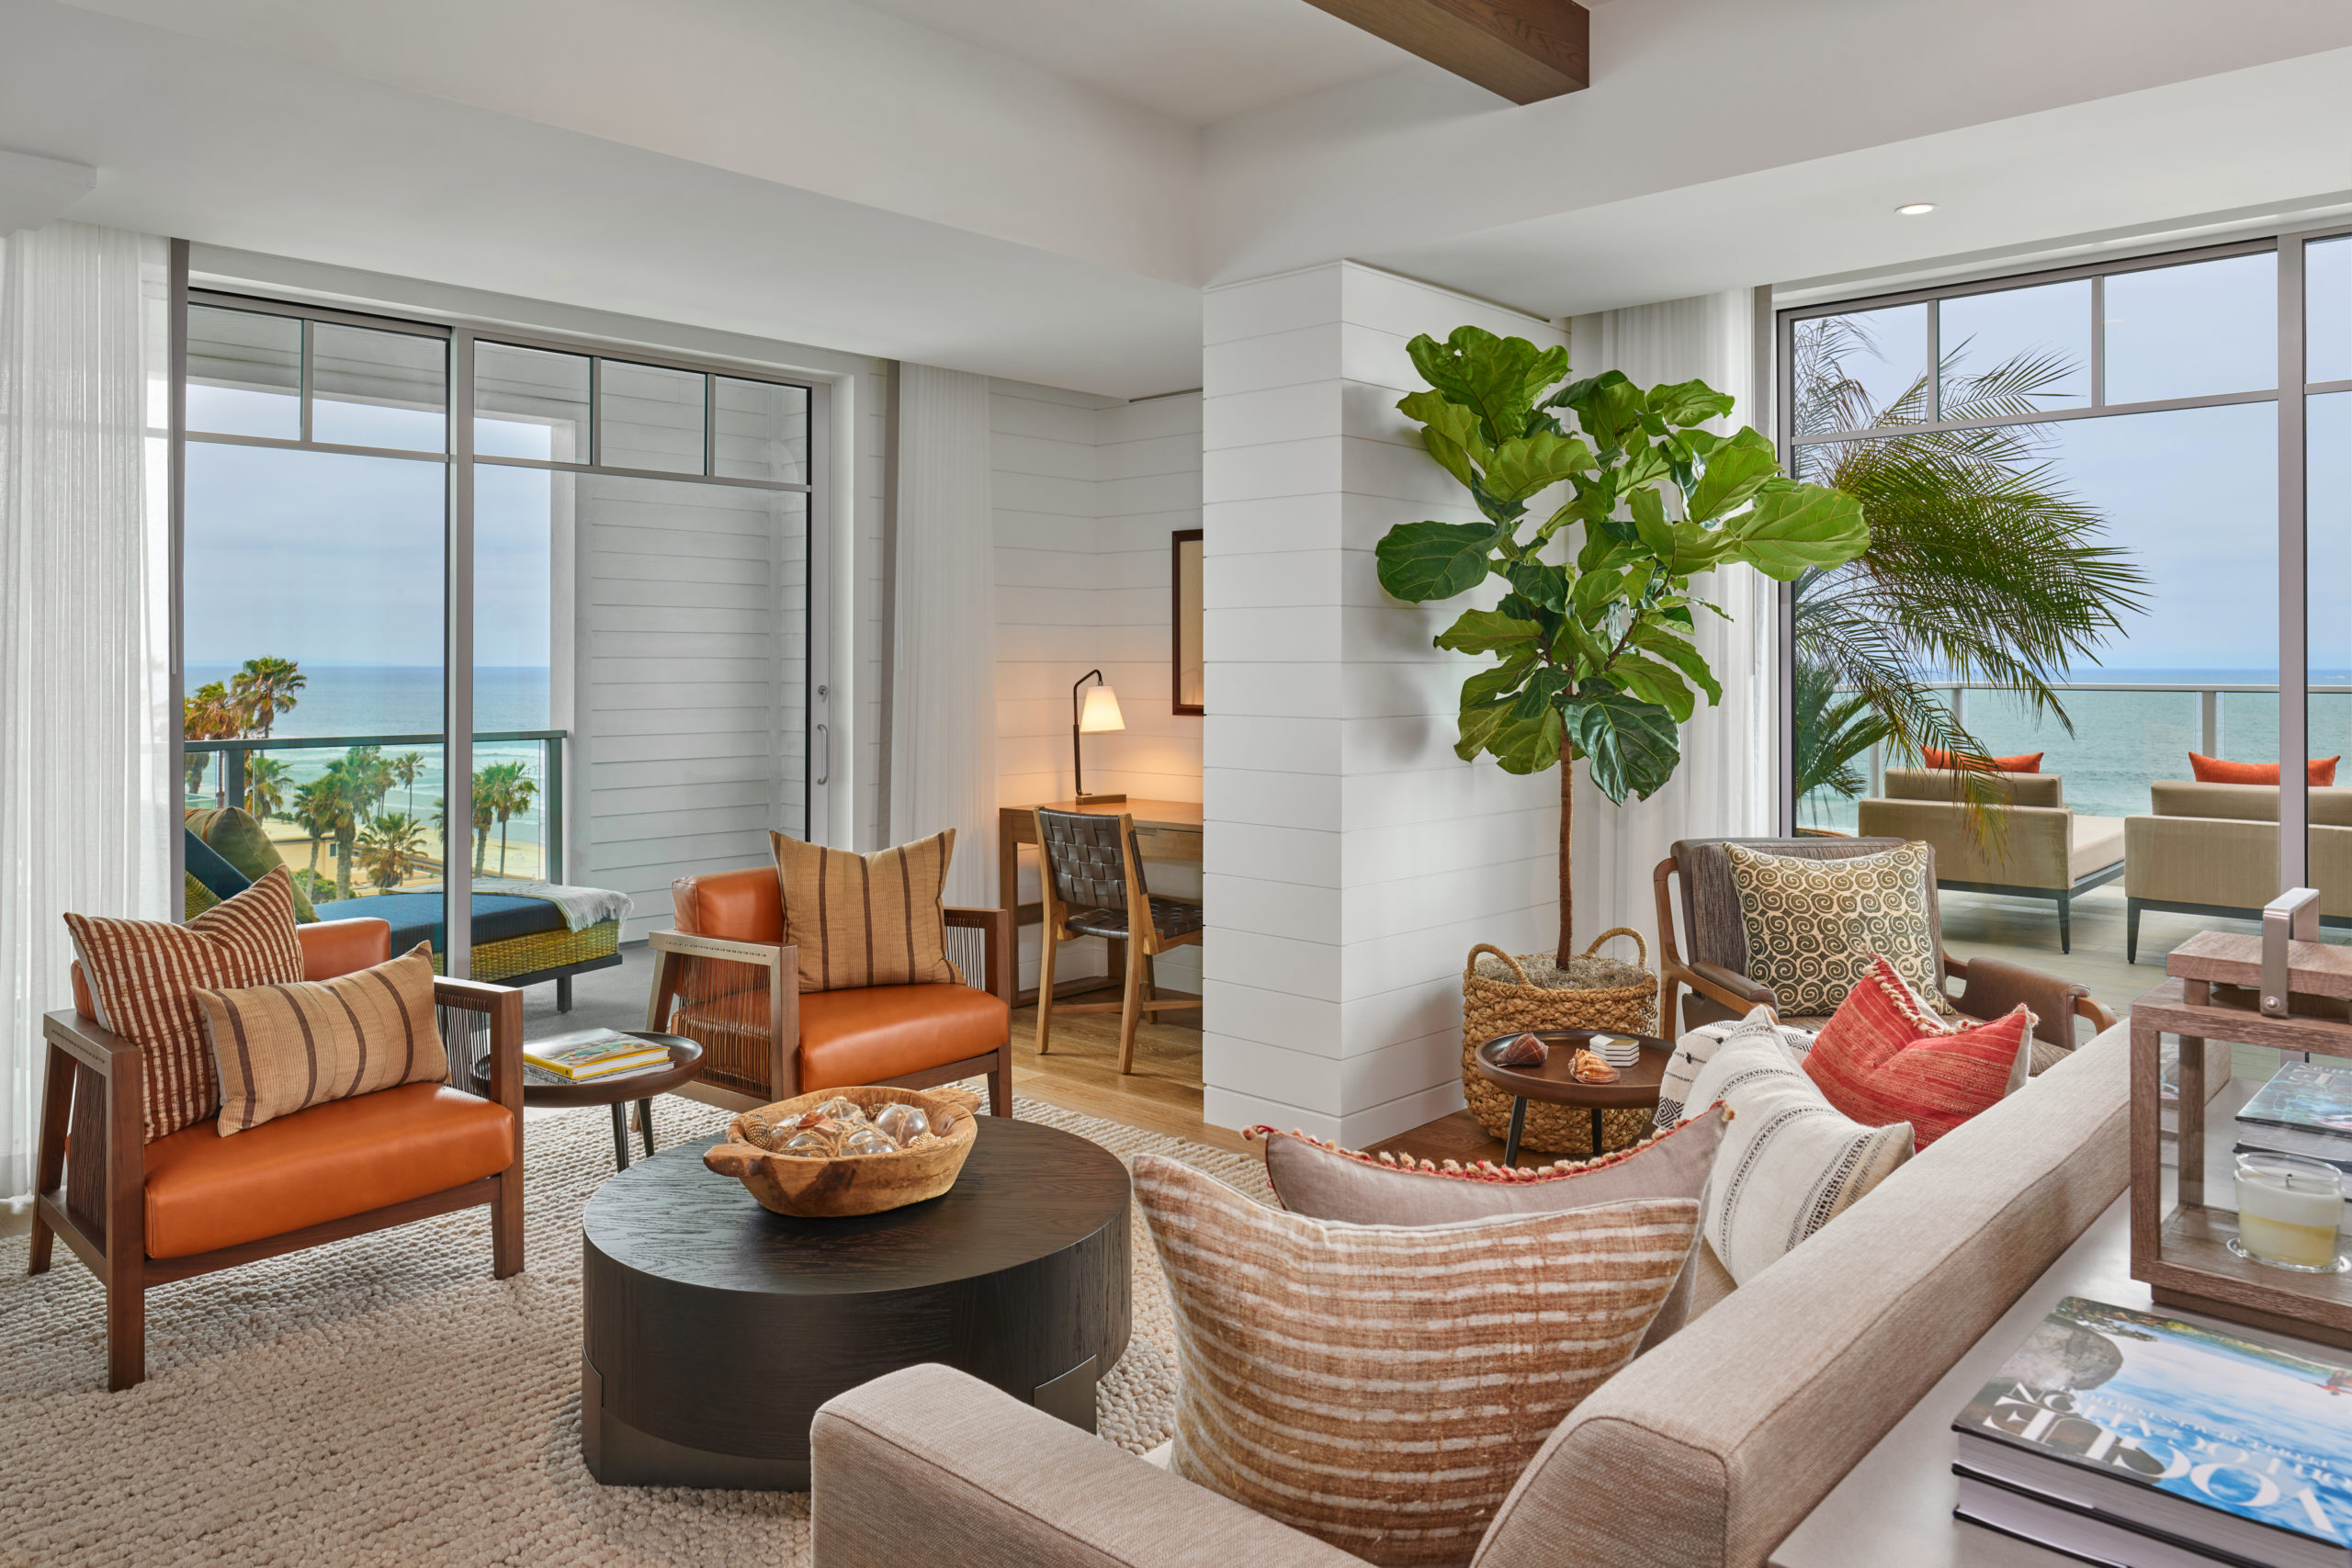 Estate Suite Living Room with impressive views